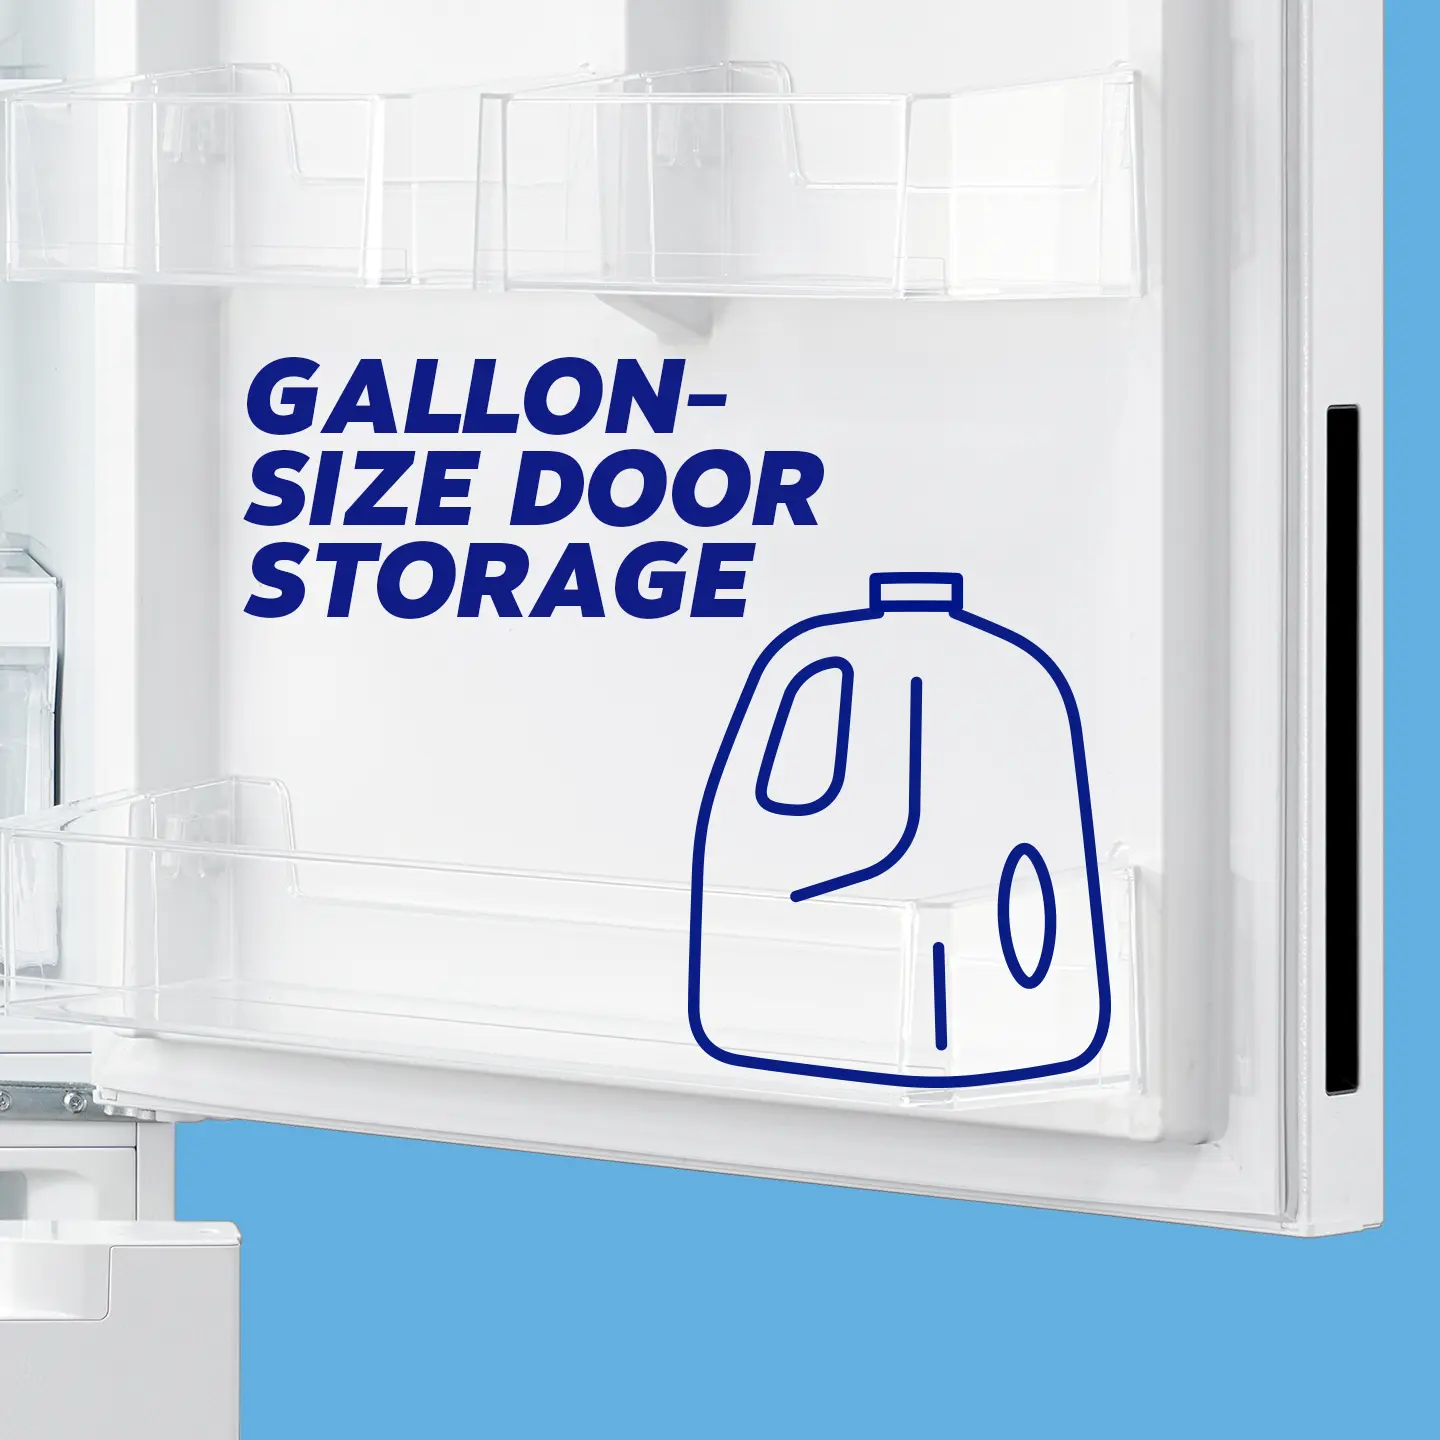 Gallon-size door storage